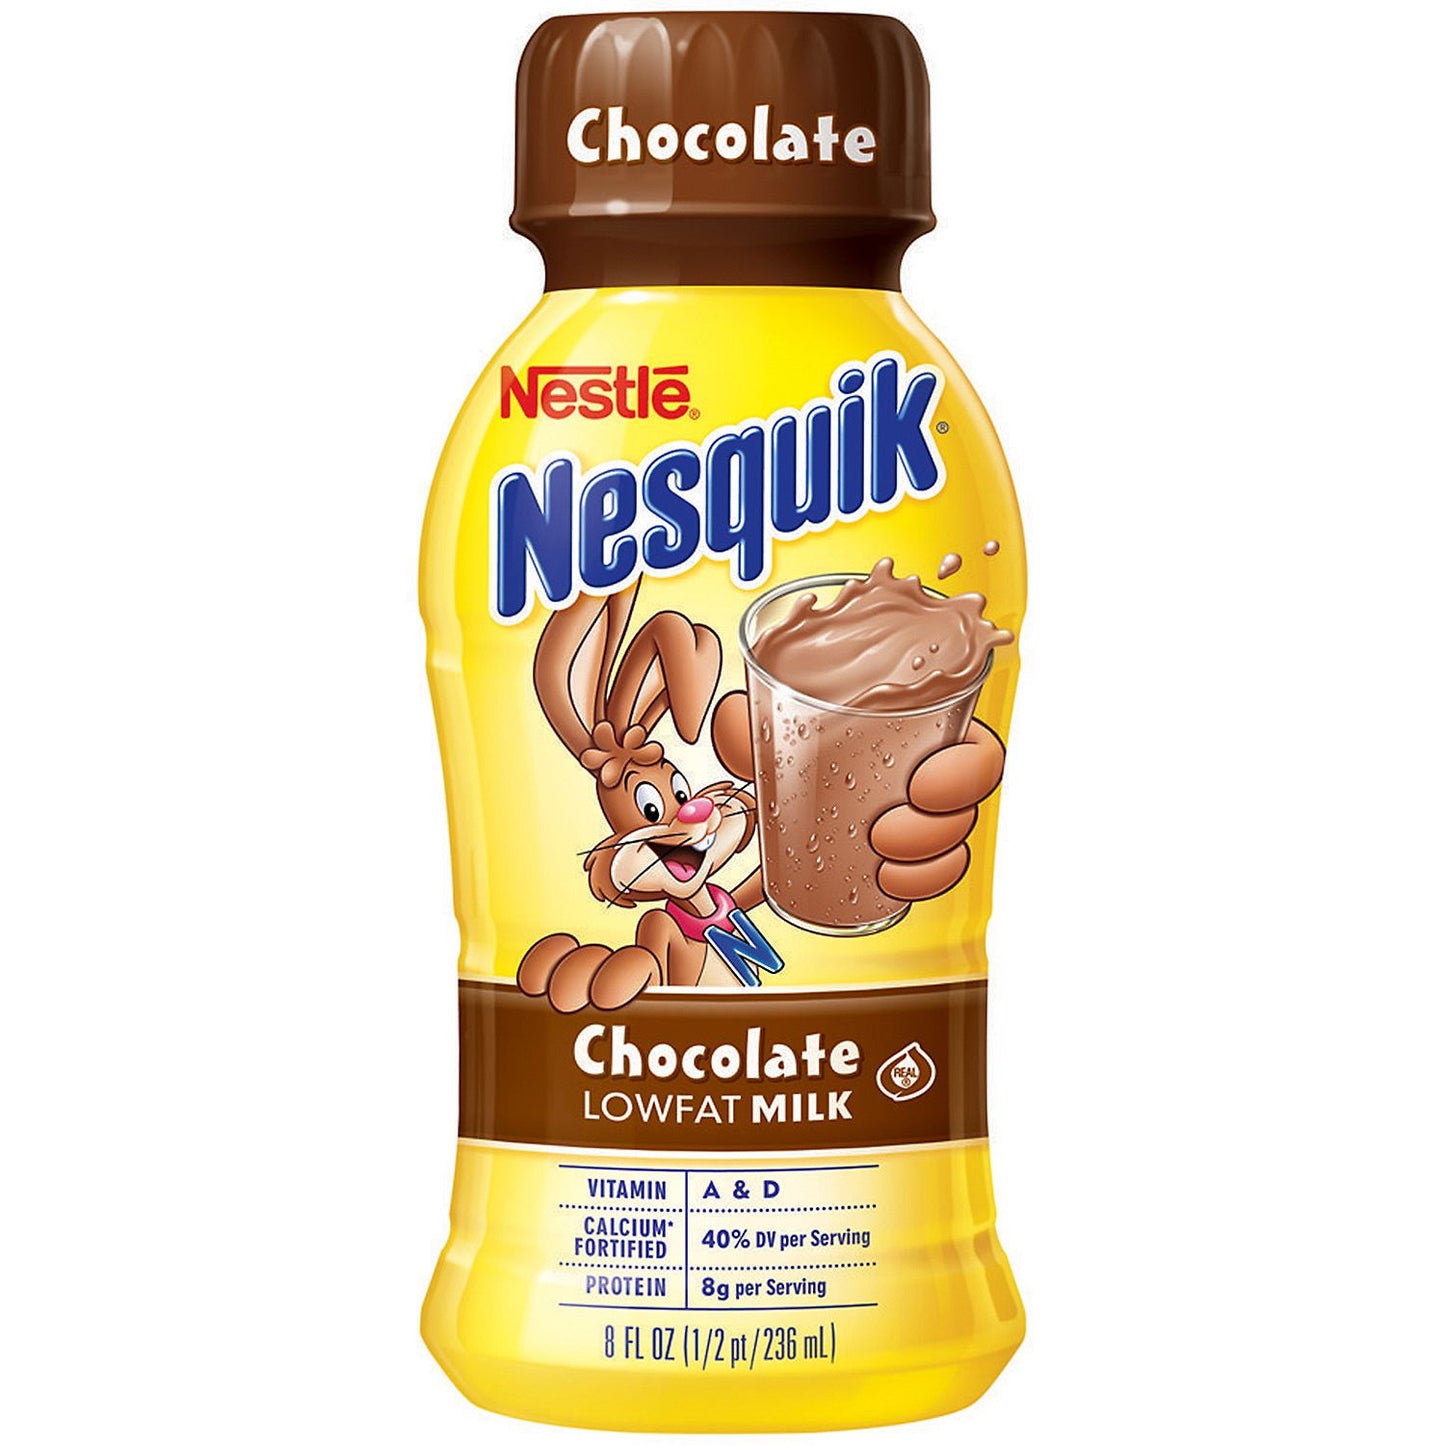 Nestle Nesquik Chocolate Lowfat Milk (8 oz. bottles, 15 pk.)